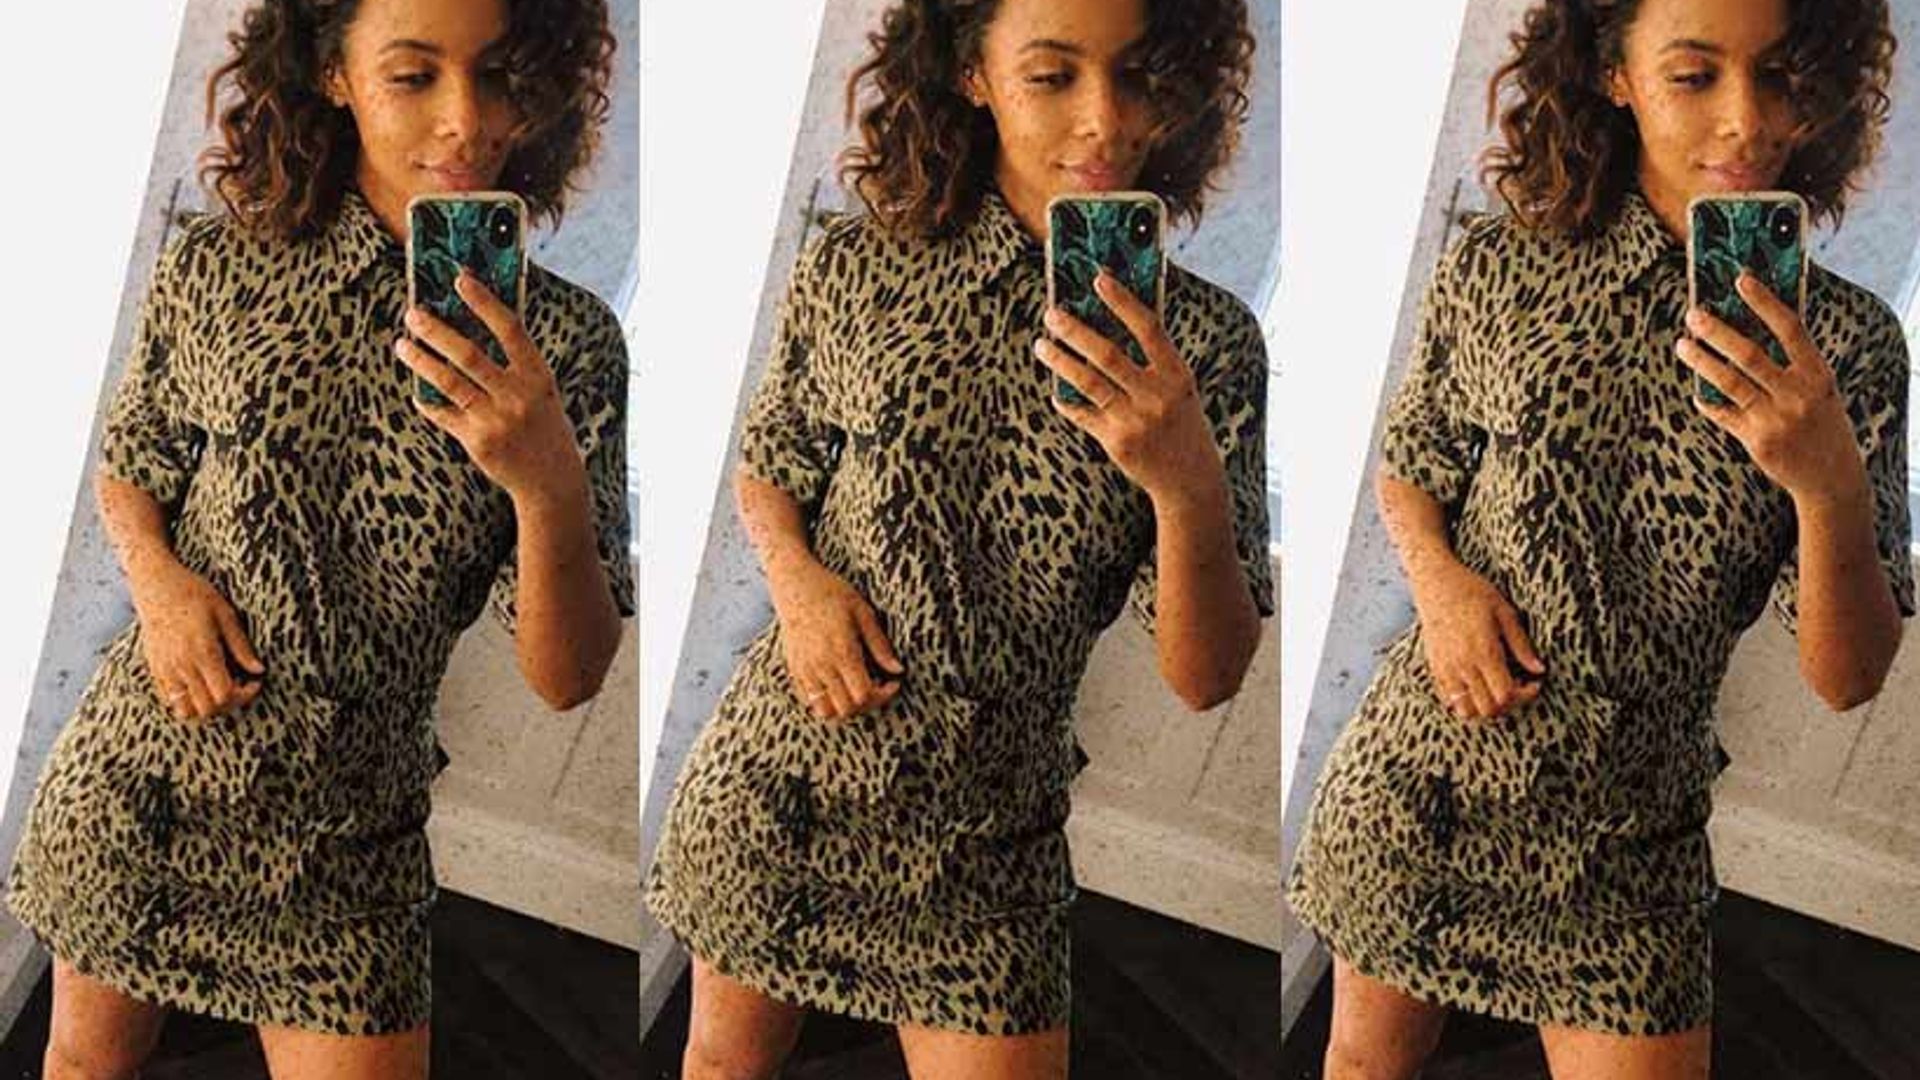 rochelle humes leopard print skirt instagram